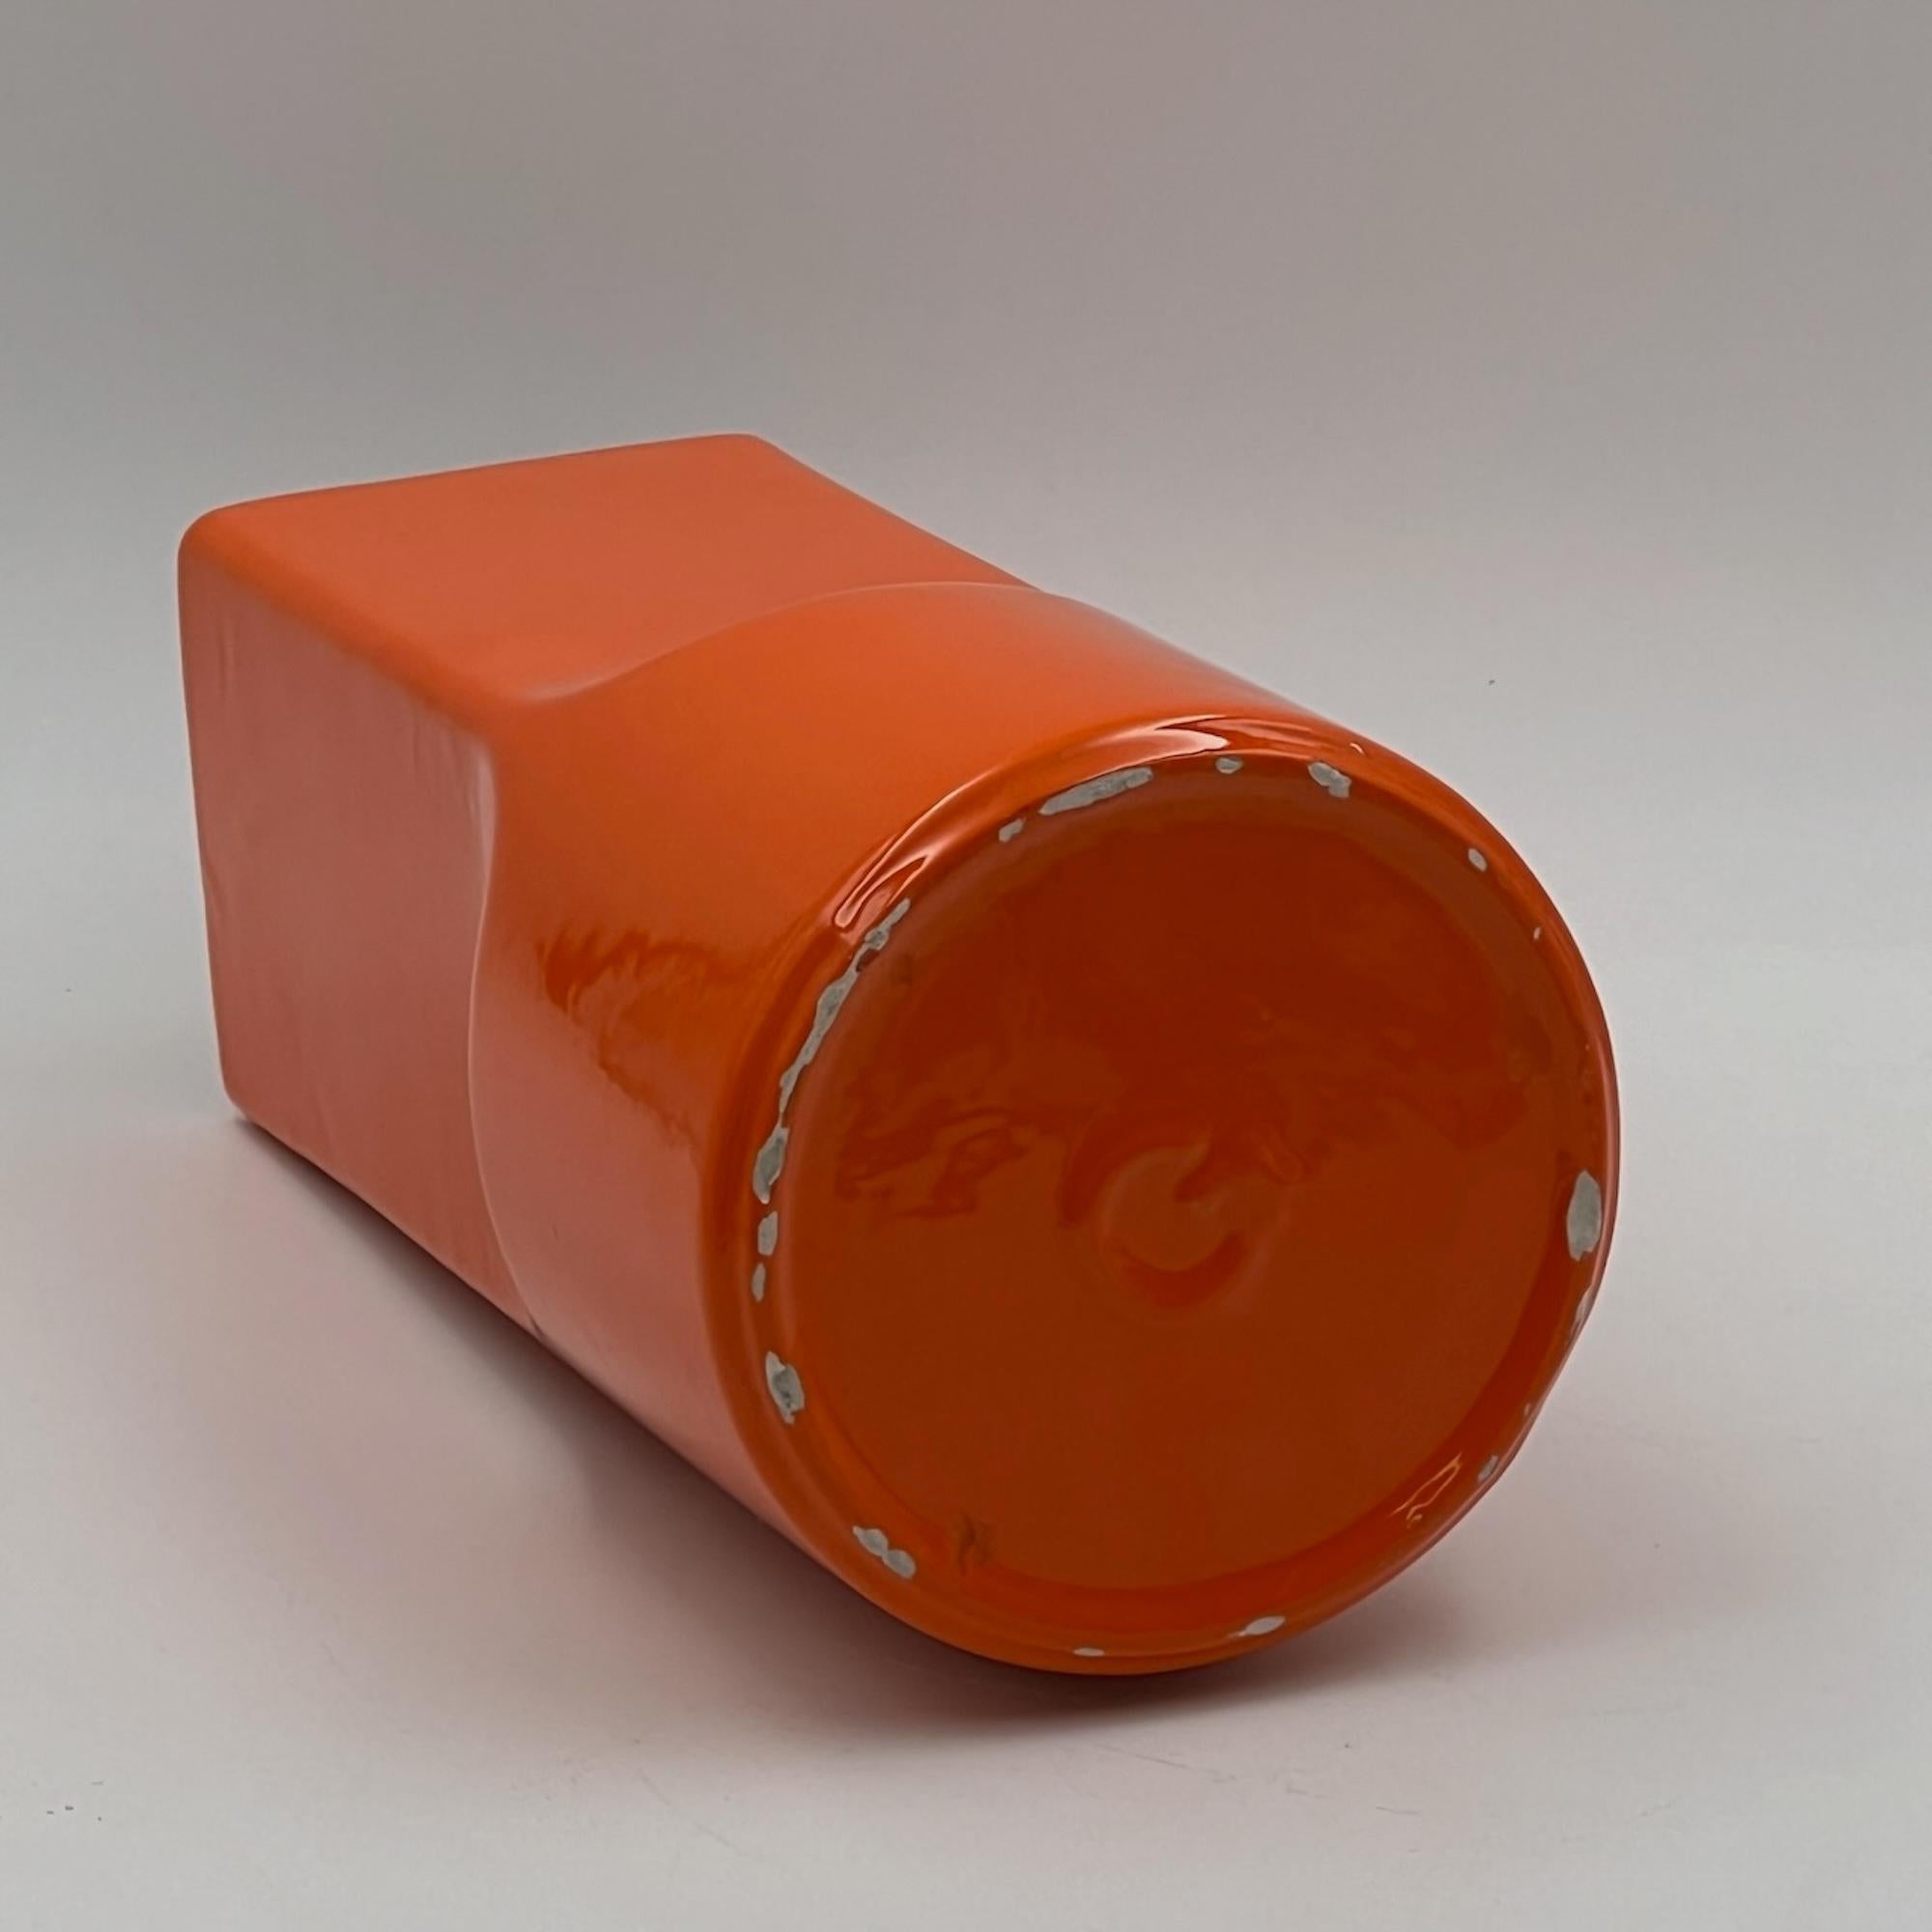 Space Age Gabbianelli Handmade Ceramic Vases in Orange and White, 1960s For Sale 4